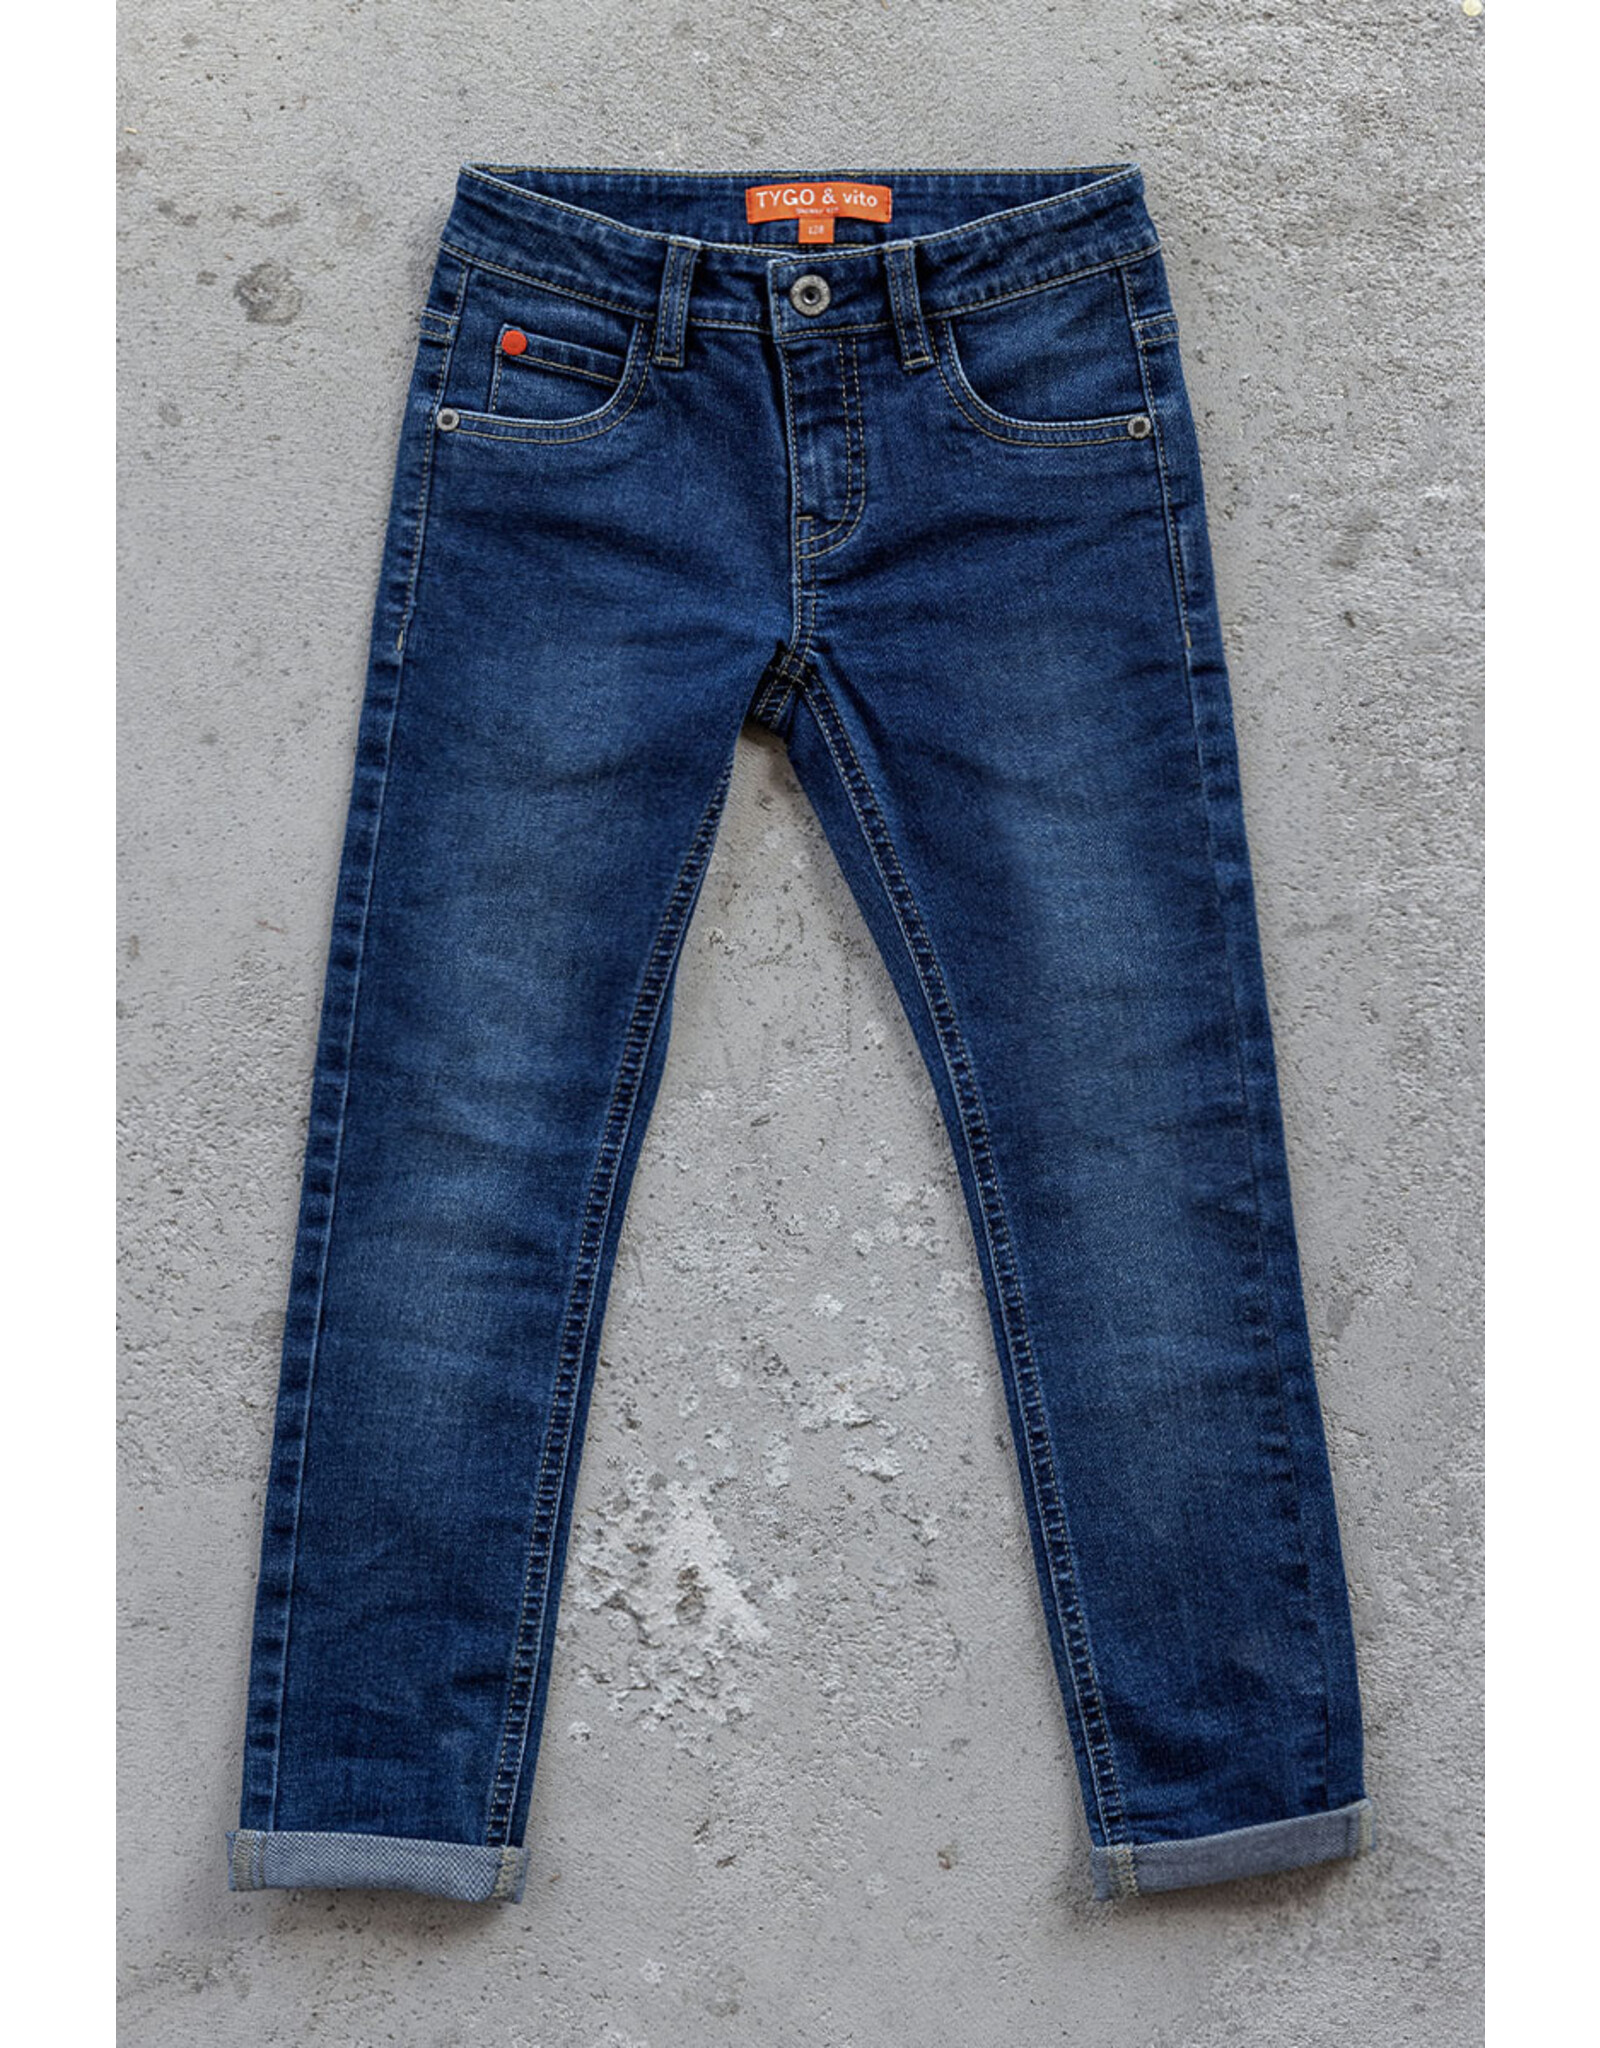 Tygo & vito Stretch Jeans skinny fit Binq Dark Used 803 NOS